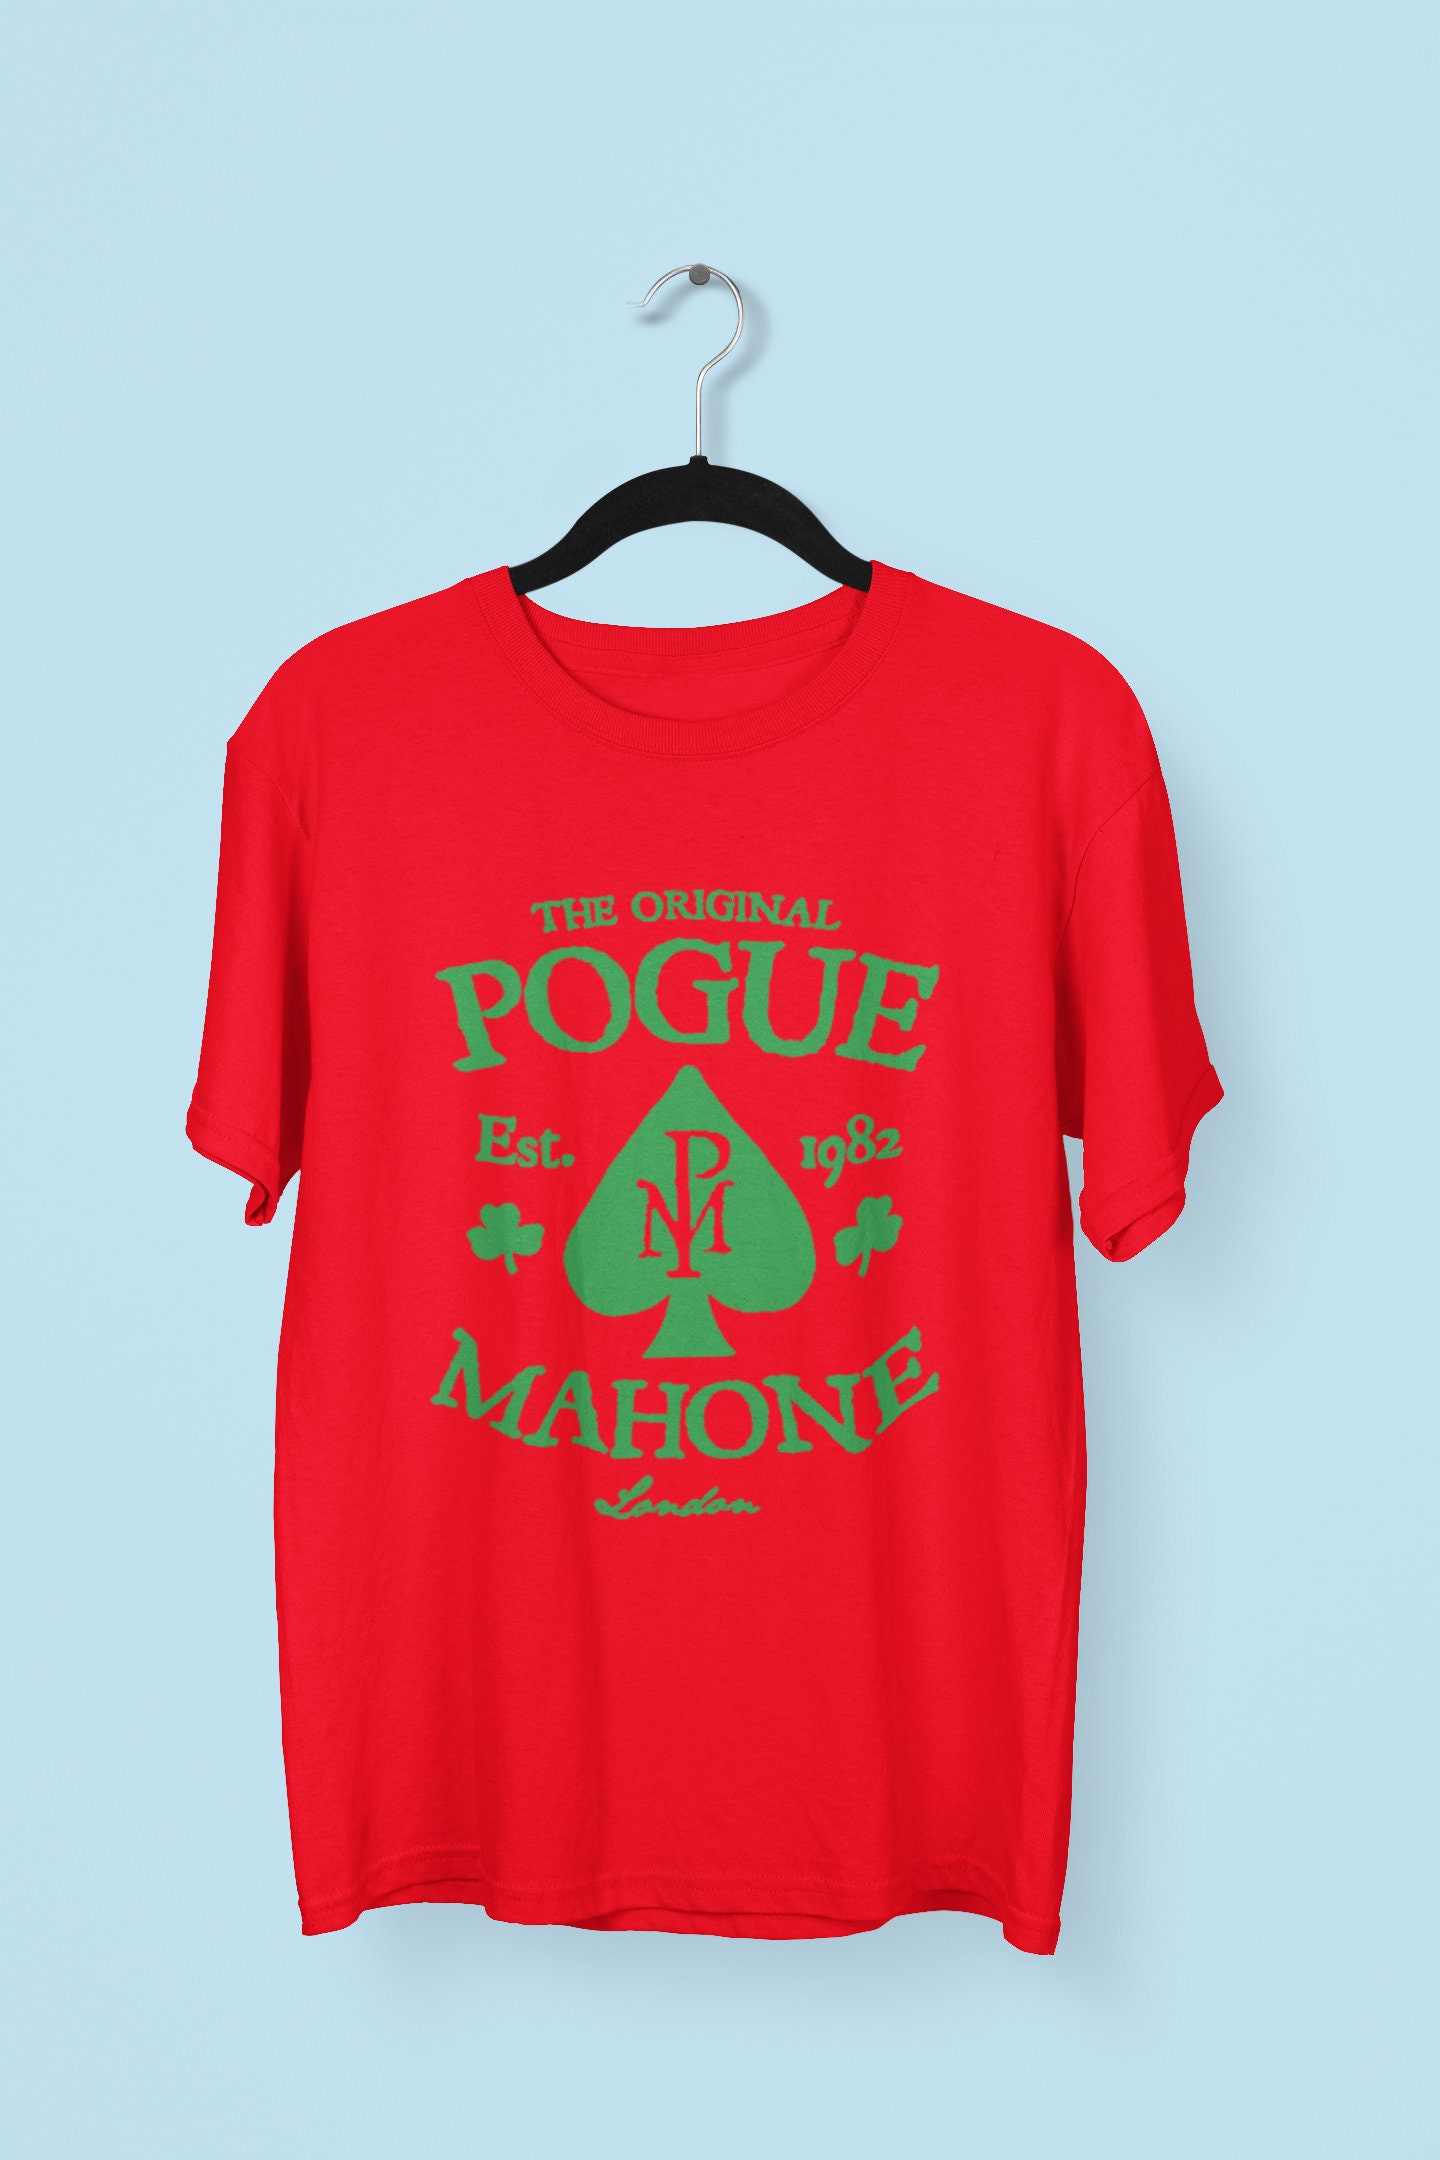 Pogue Mahone Pogue Mahone Unisex T-Shirt